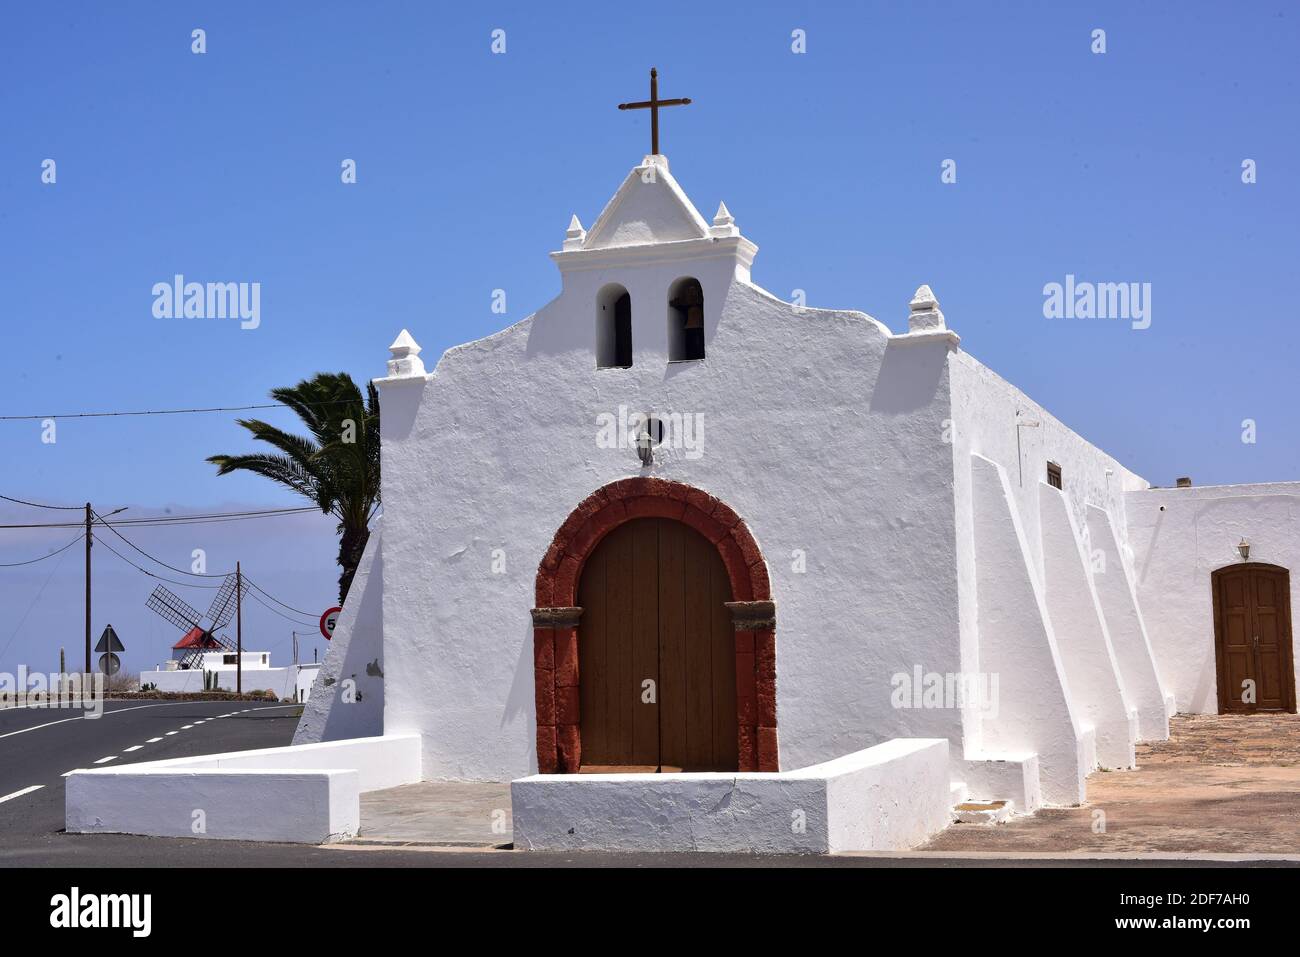 Tiagua hermitage. Teguise, Lanzarote Island, Canary Islands, Spain. Stock Photo